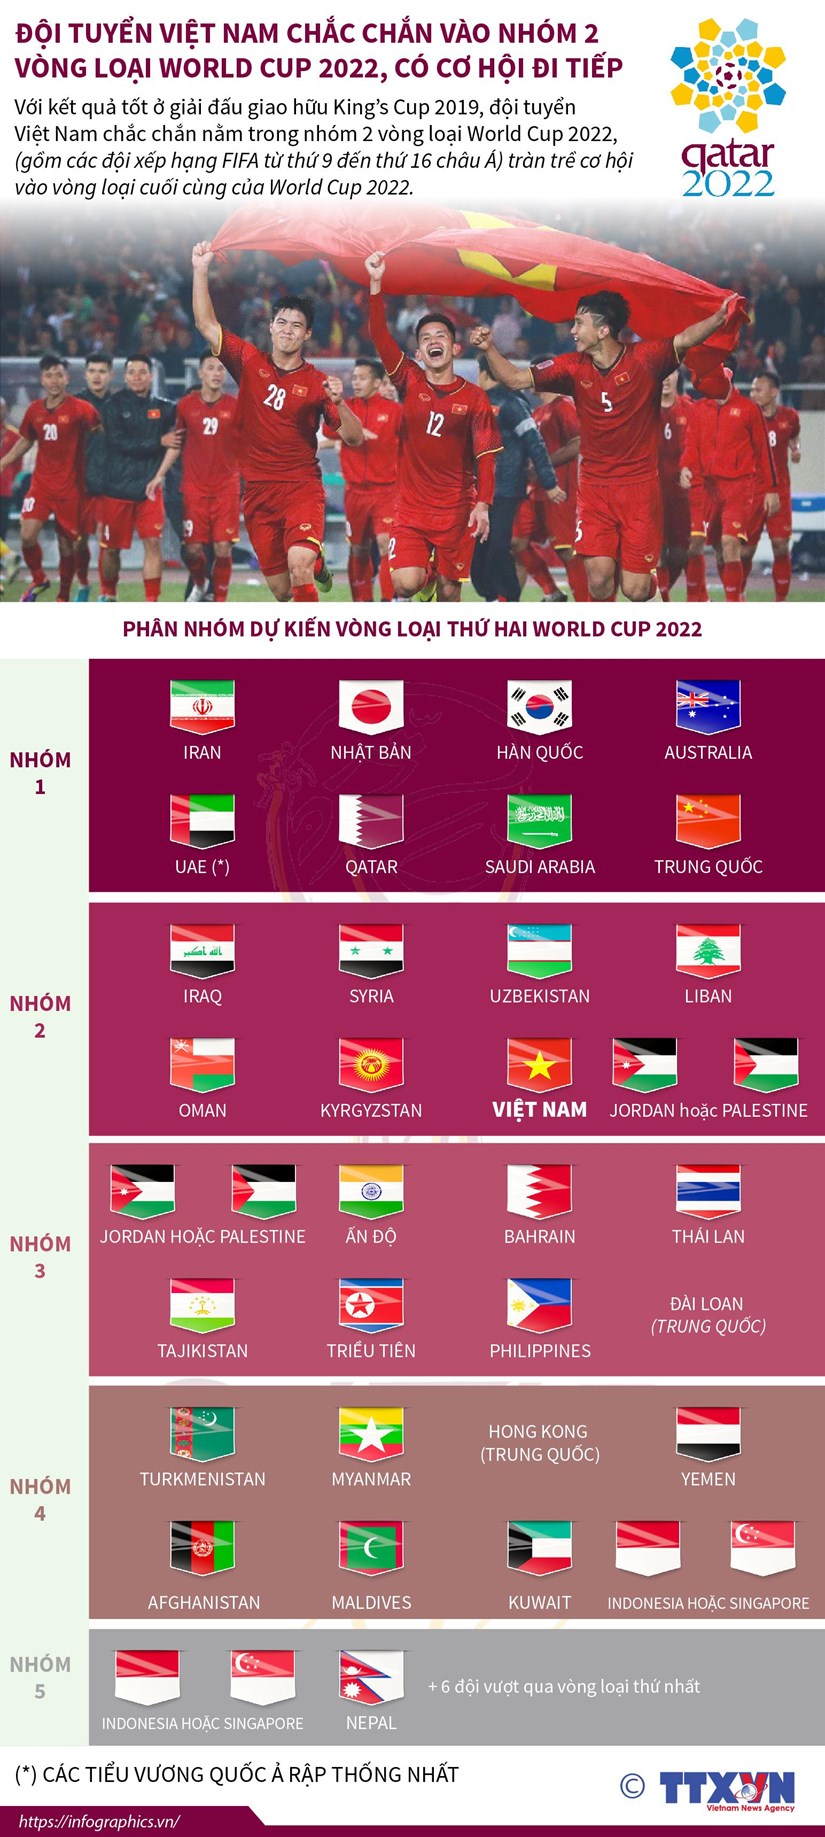 [Infographics] Doi tuyen Viet Nam vao nhom 2 vong loai World Cup 2022 hinh anh 1